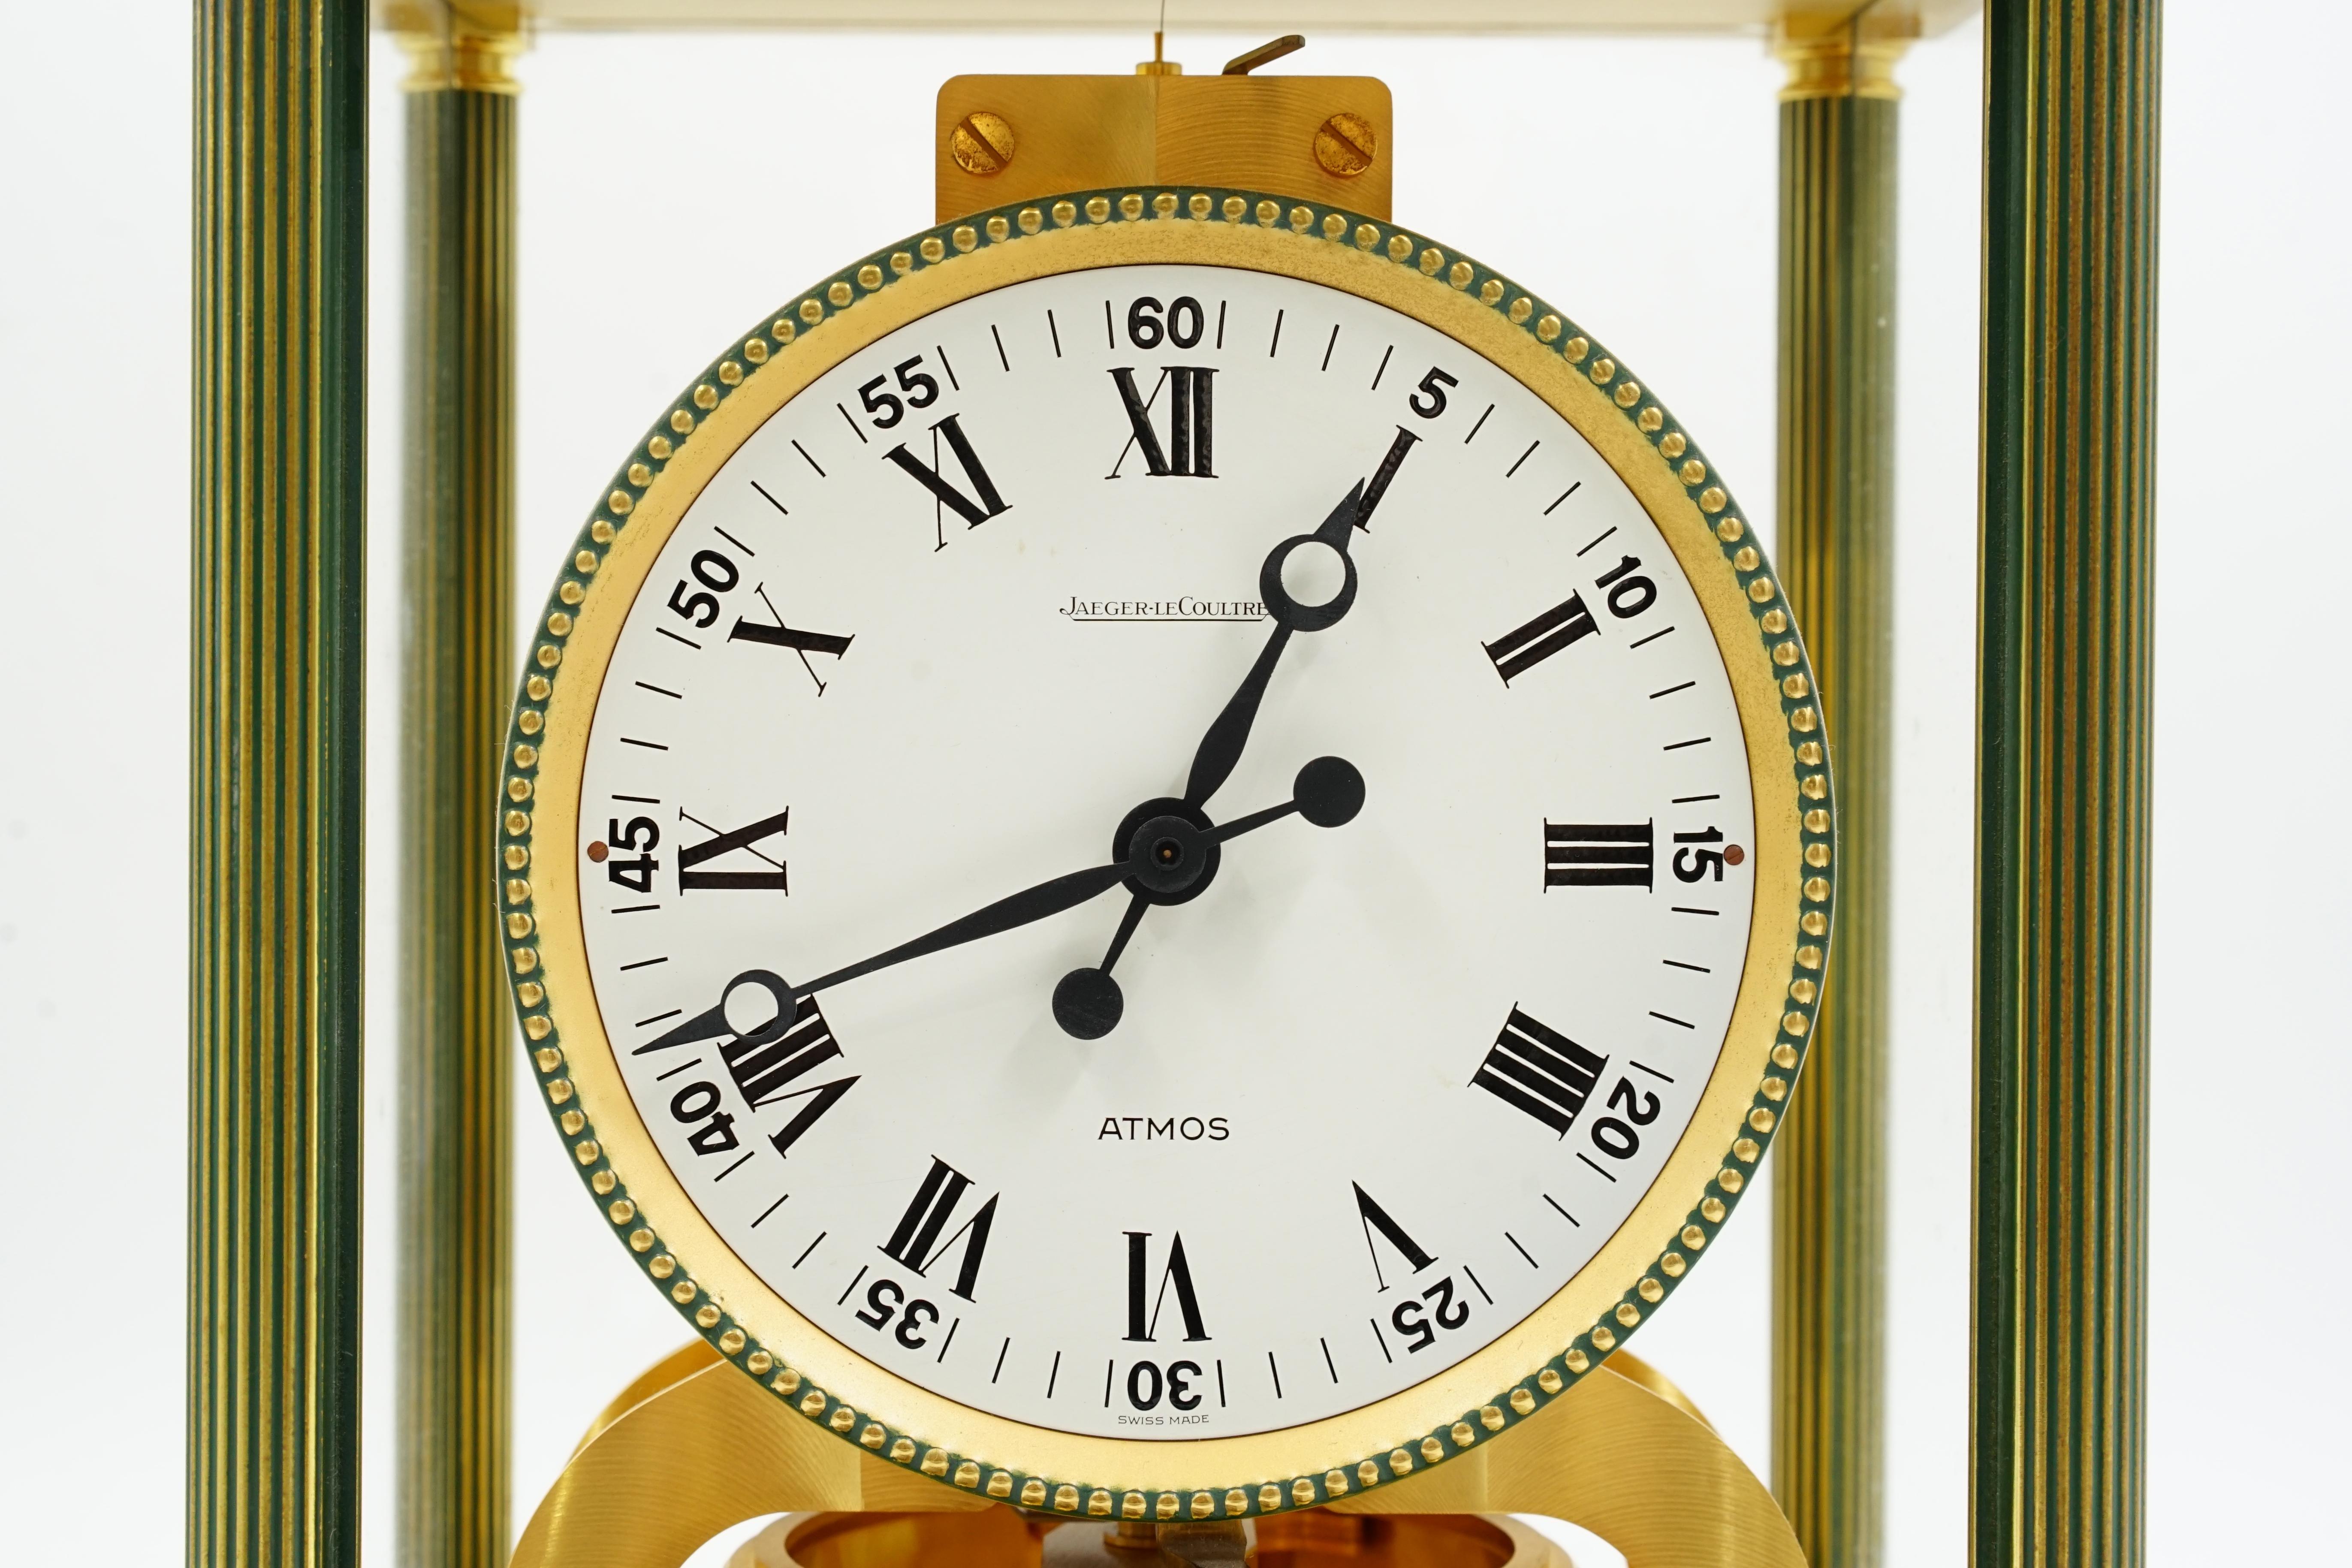 Jaeguer Le coultre Atmos table clock For Sale 1